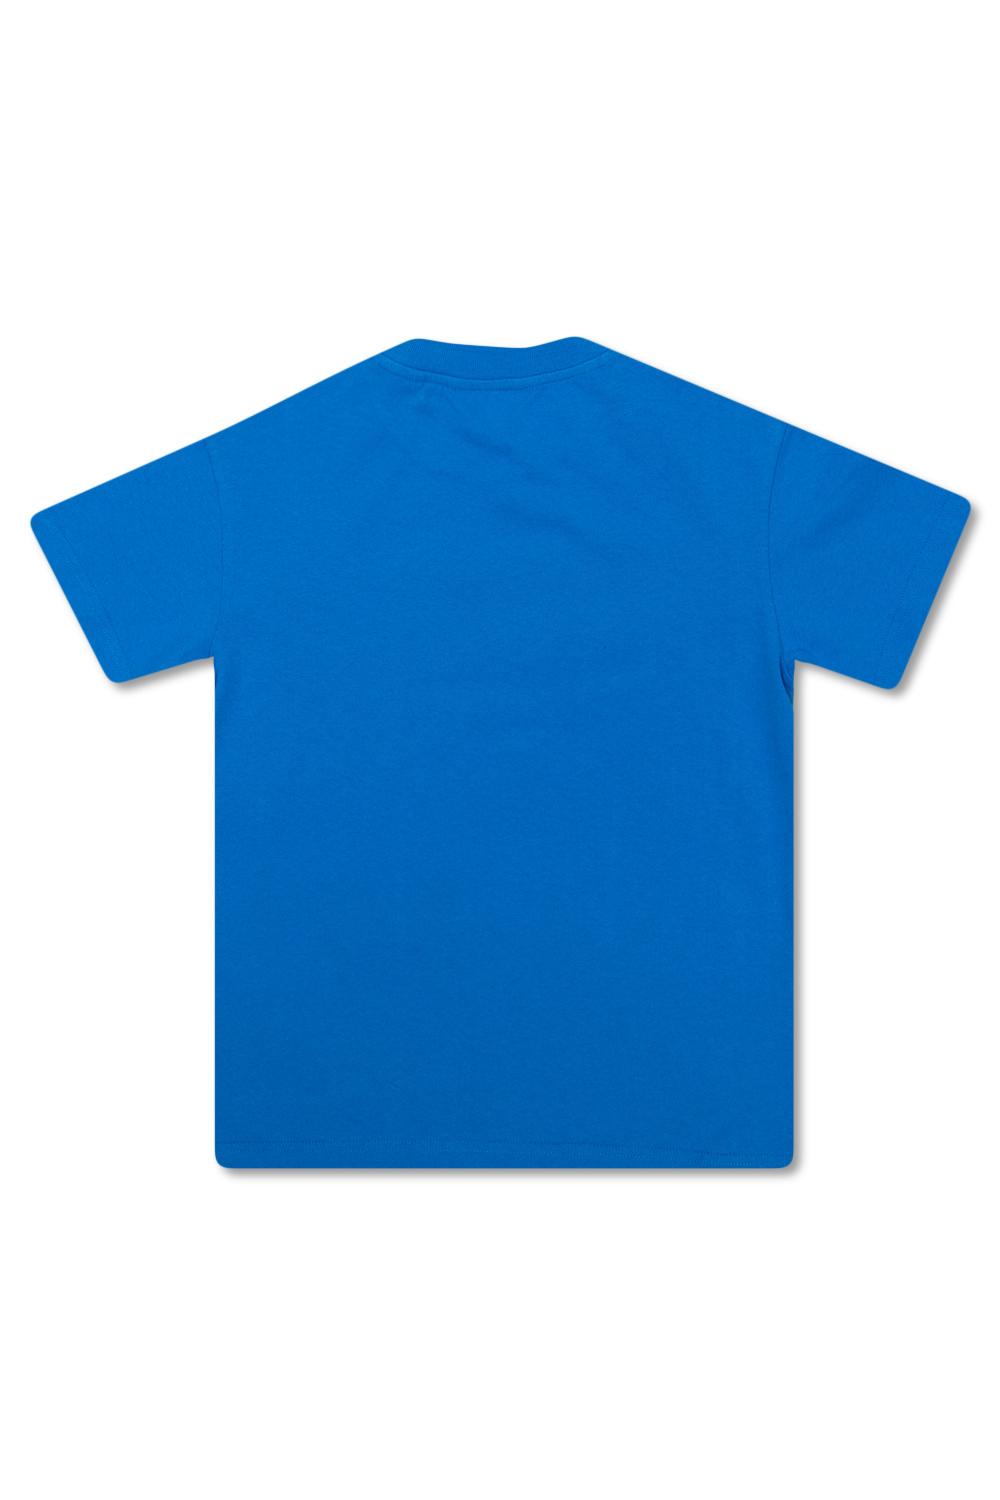 Astro logo distressed-finish sweatshirt Printed T-shirt